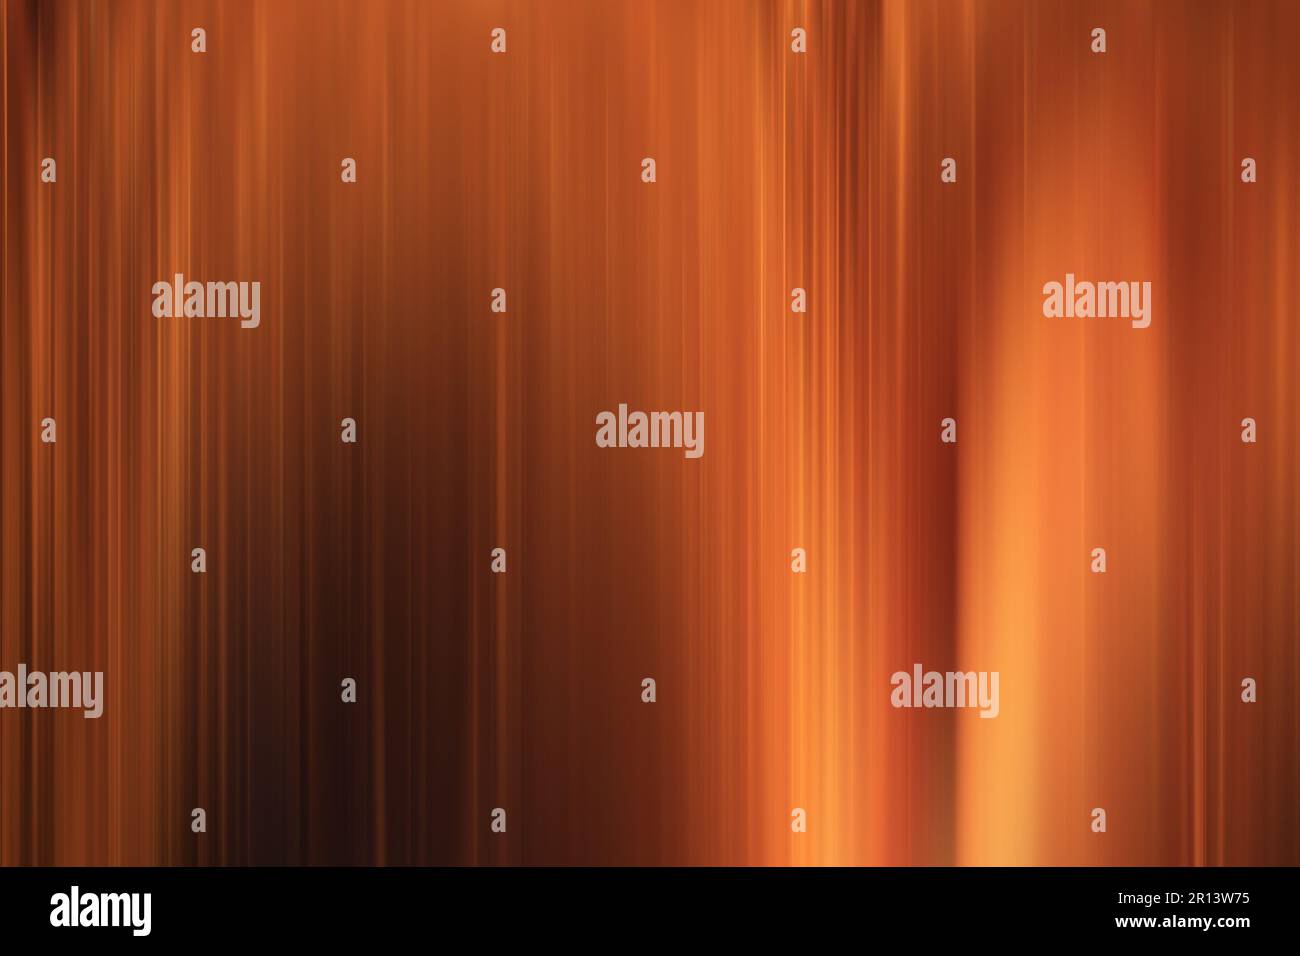 Orange digital art, illustration, fire, warmth, abstract. Wallpaper, design, background pattern. Stock Photo